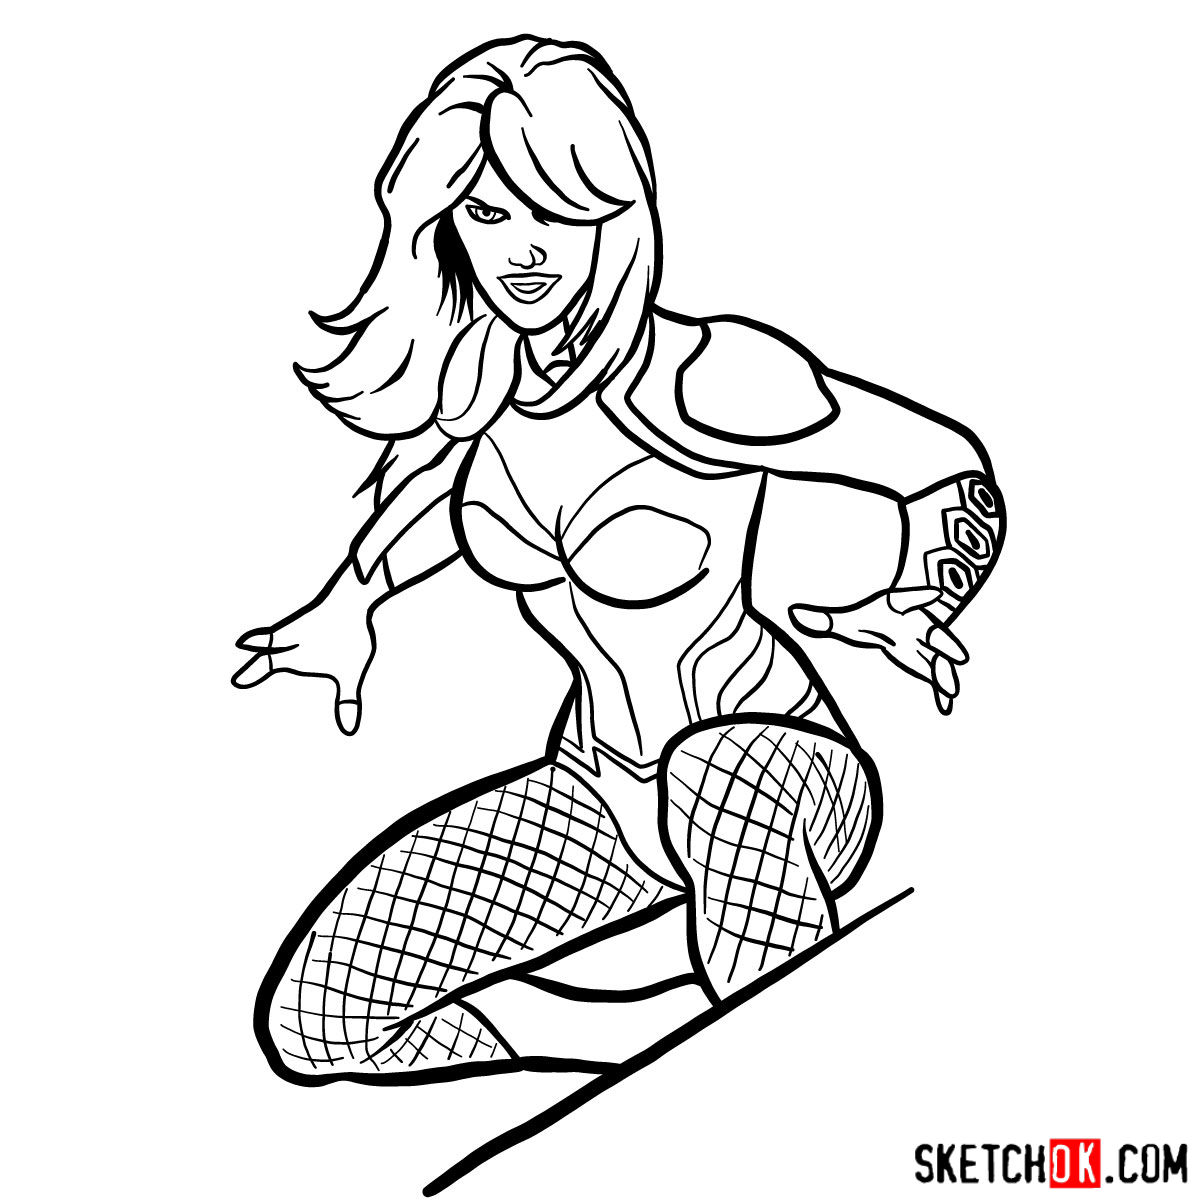 How to draw Black Canary, a DC Comics superheroine - step 12